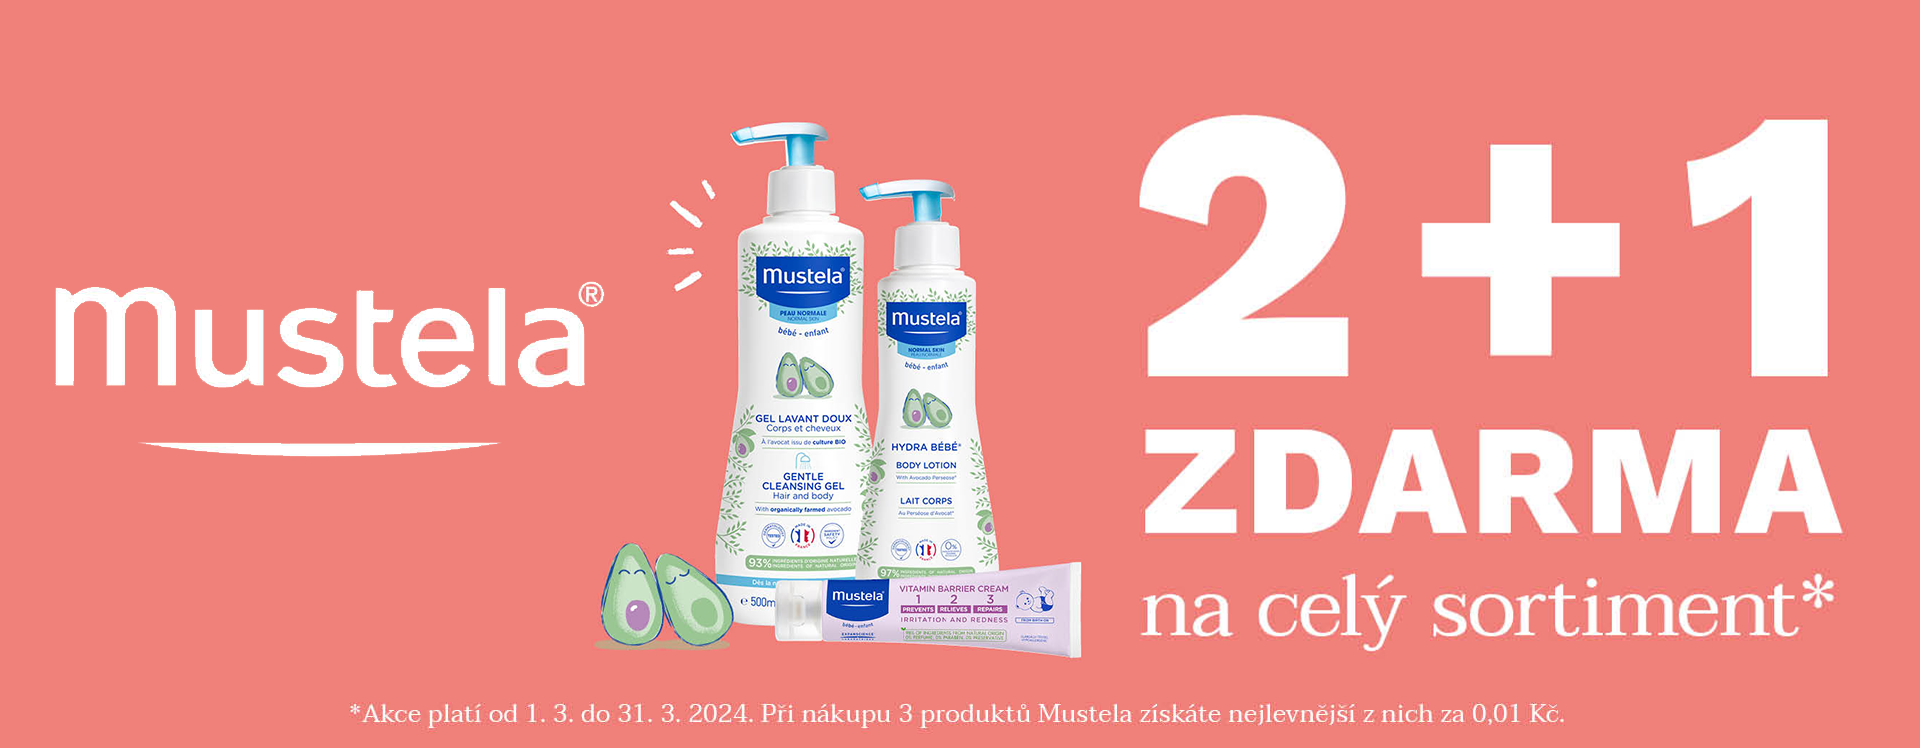 Onlinelekarna.cz | Mustela 3za2